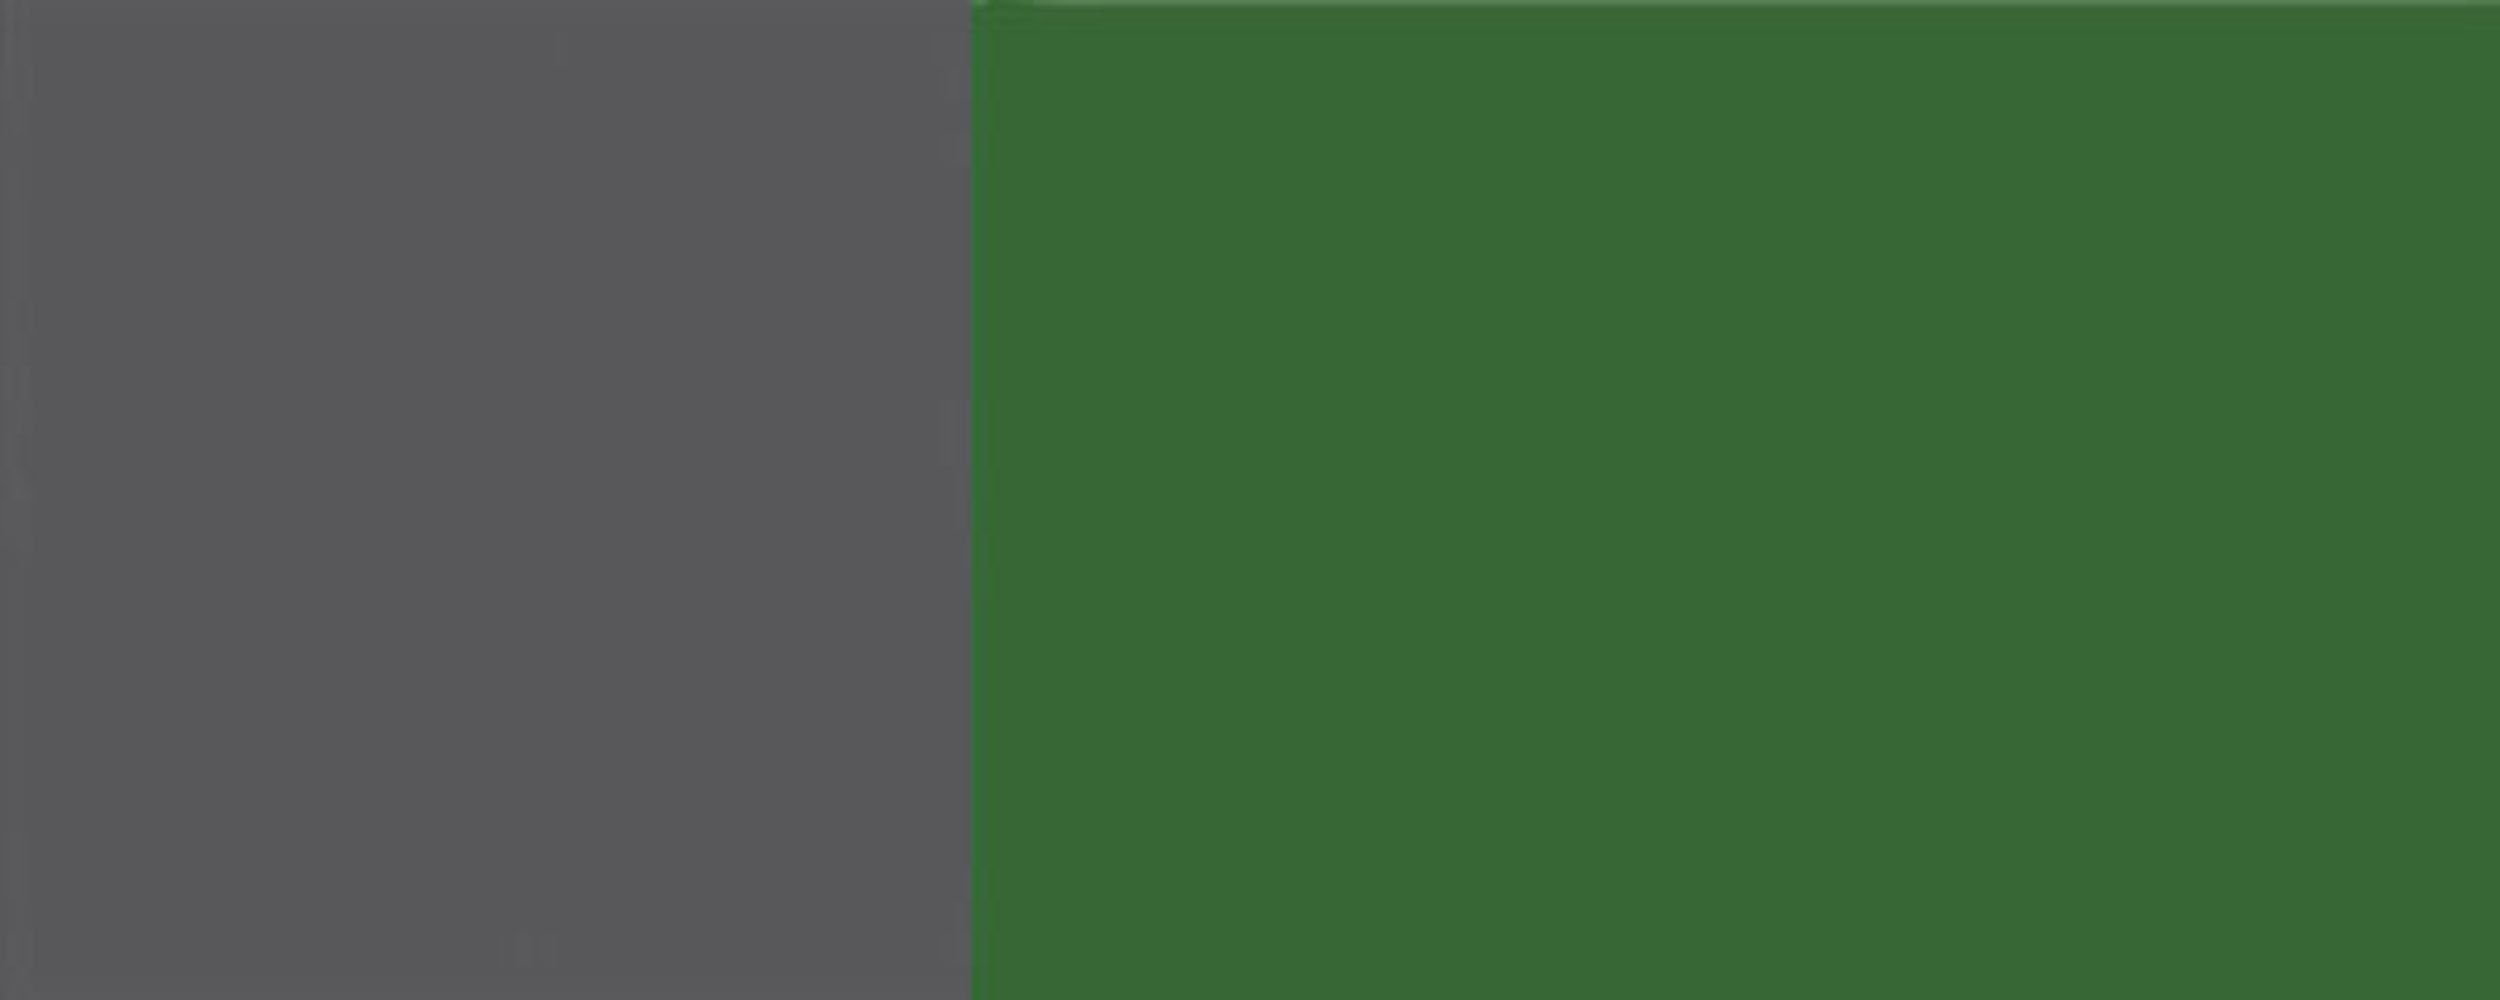 6001 Klapphängeschrank Korpusfarbe 2-türig RAL grifflos smaragdgrün wählbar 90cm Florence Feldmann-Wohnen (Florence) und Hochglanz Front-